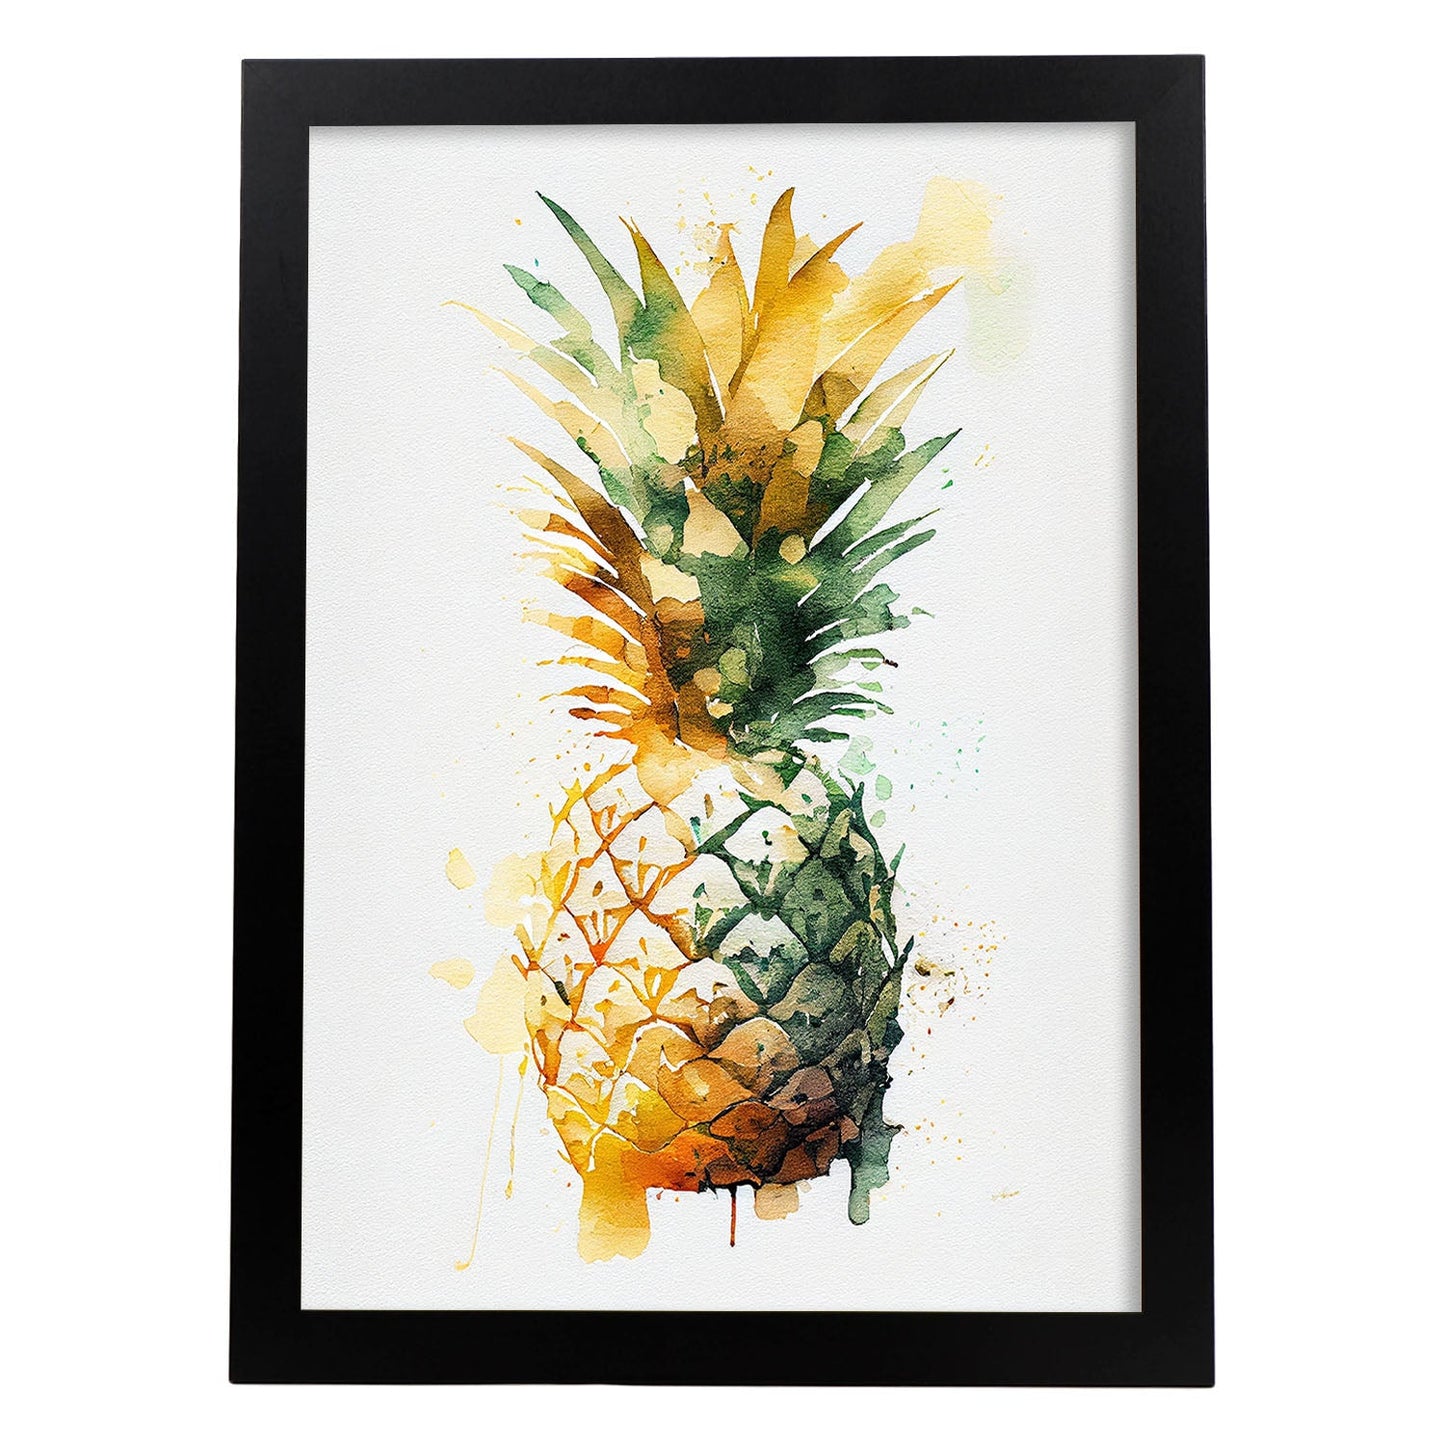 Nacnic minimalist Pineapple_2. Aesthetic Wall Art Prints for Bedroom or Living Room Design.